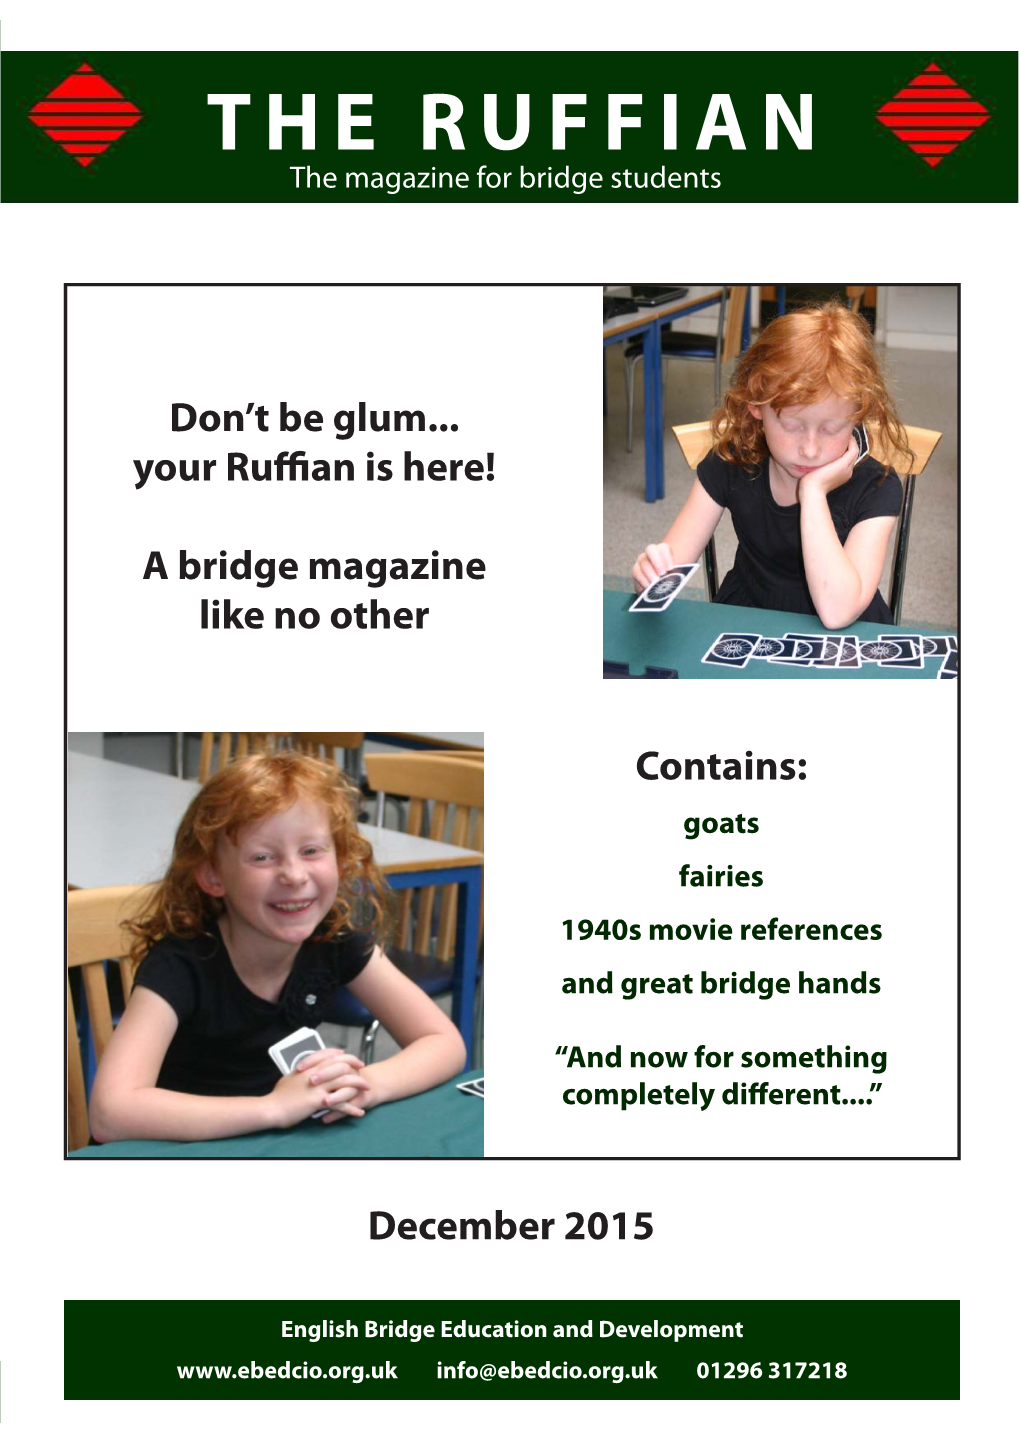 THE RUFFIAN the Magazine for Bridge Students